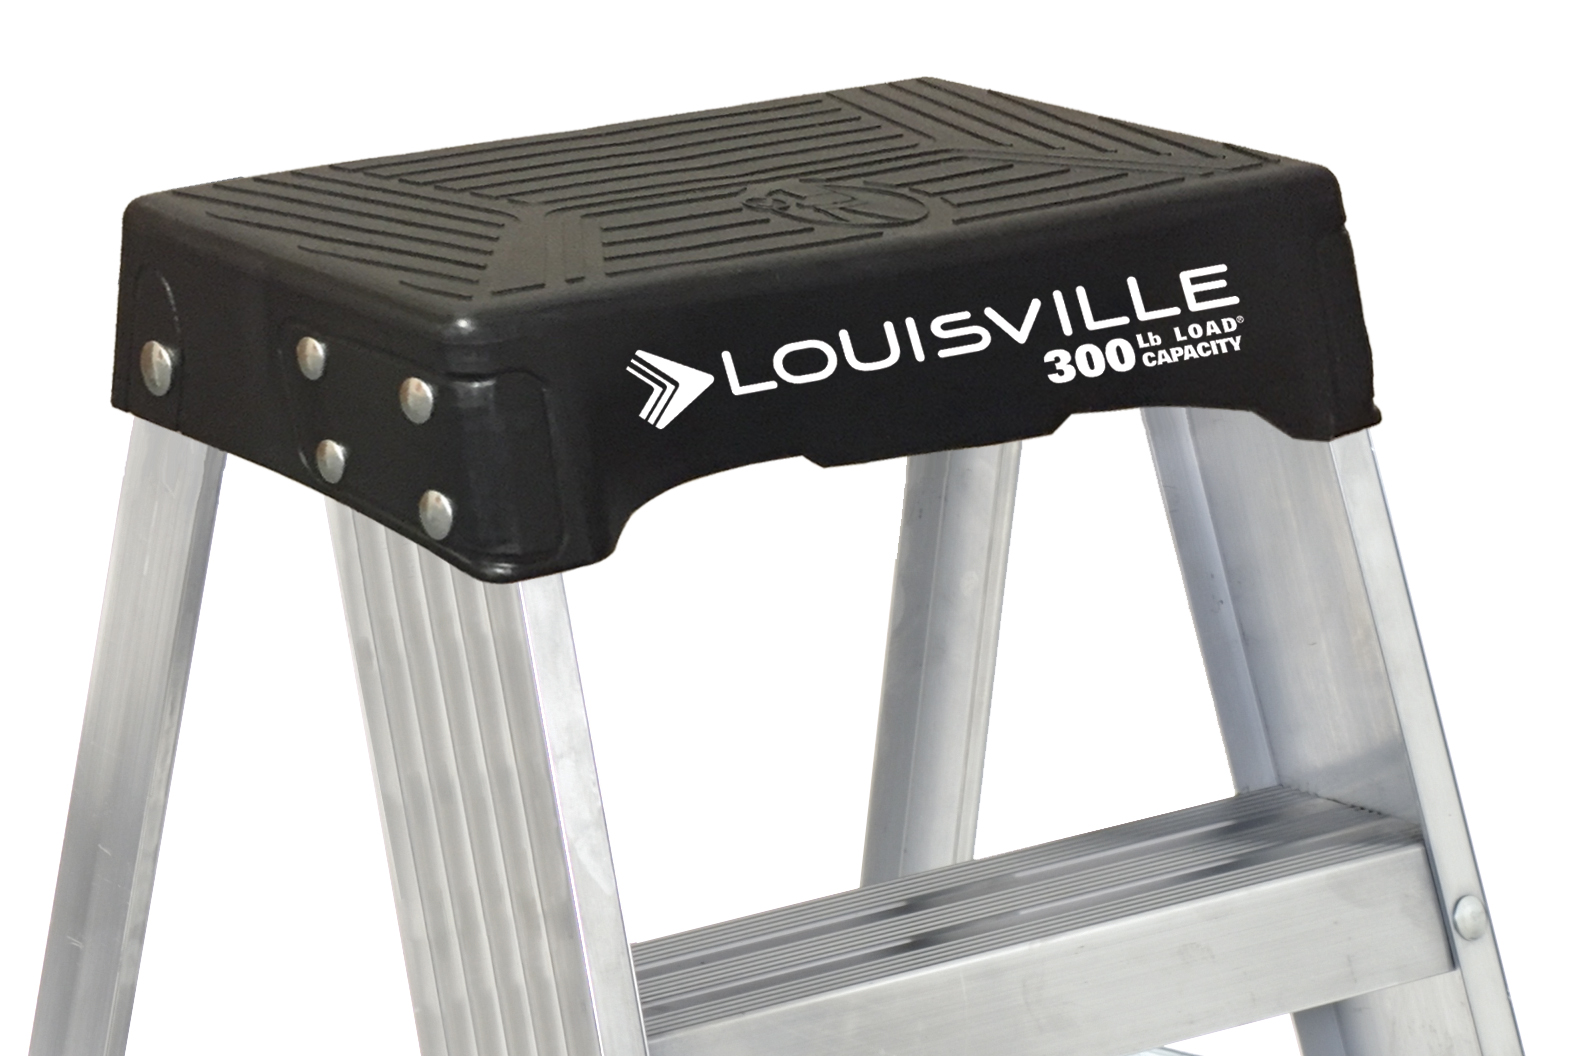 300 lb LOUISVILLE AS3002 2 Steps Load Capacity, Aluminum Step Stool 